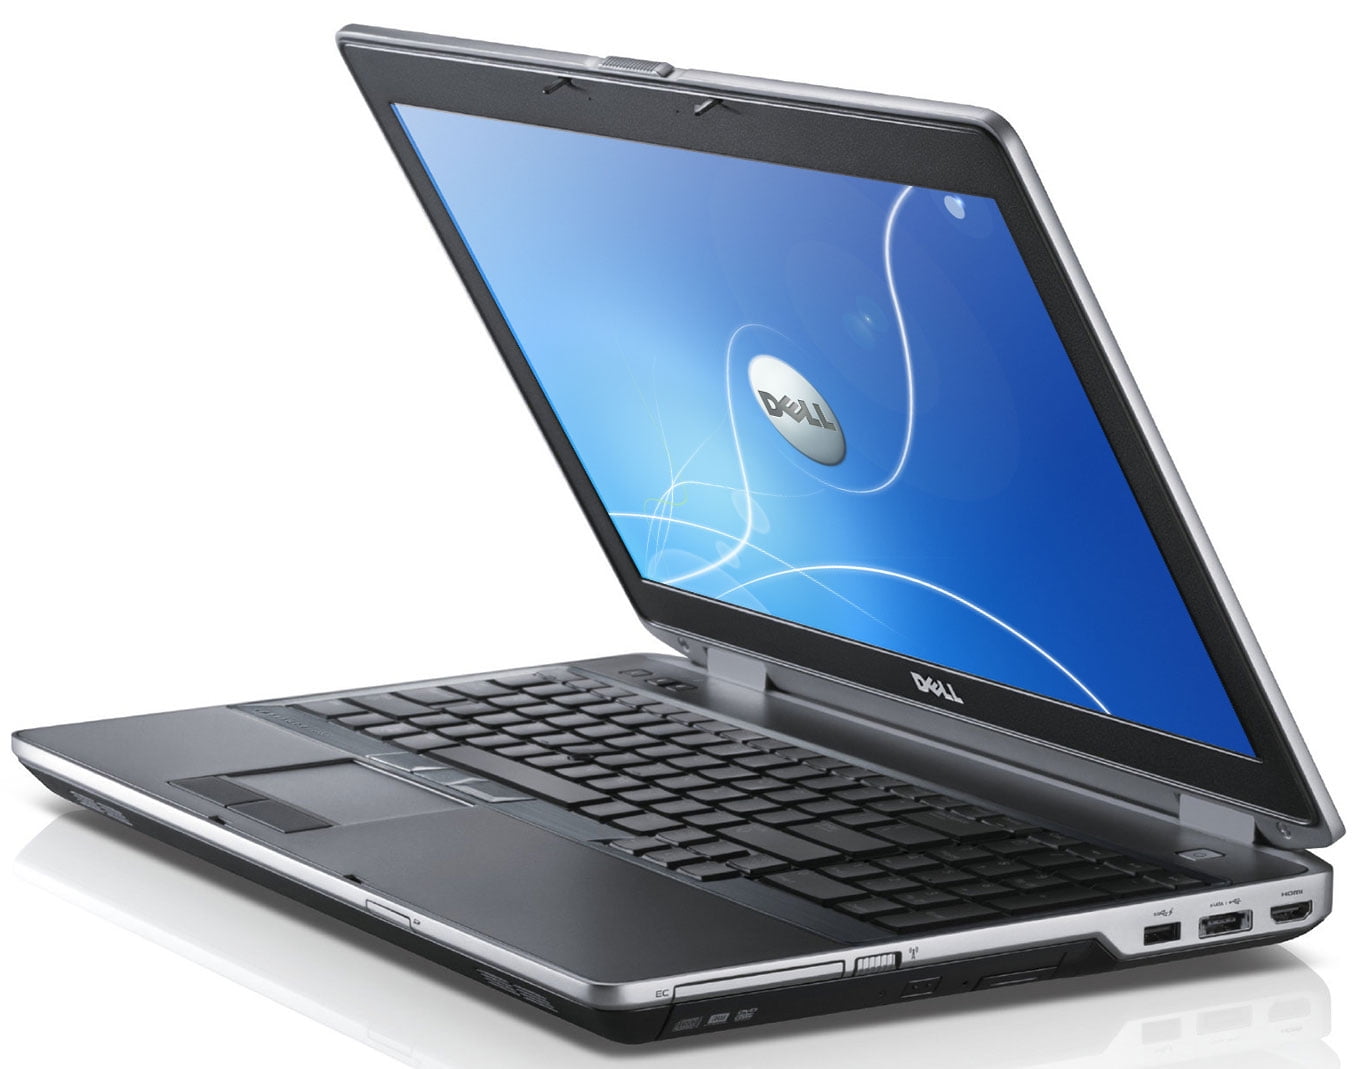 Refurbished: Dell Latitude E6530 Laptop, Intel Core i5 Processor, 4gb,  320gb HD, Windows 7 Professional, DVD drive, Intel HD Graphics 4000, 15.6